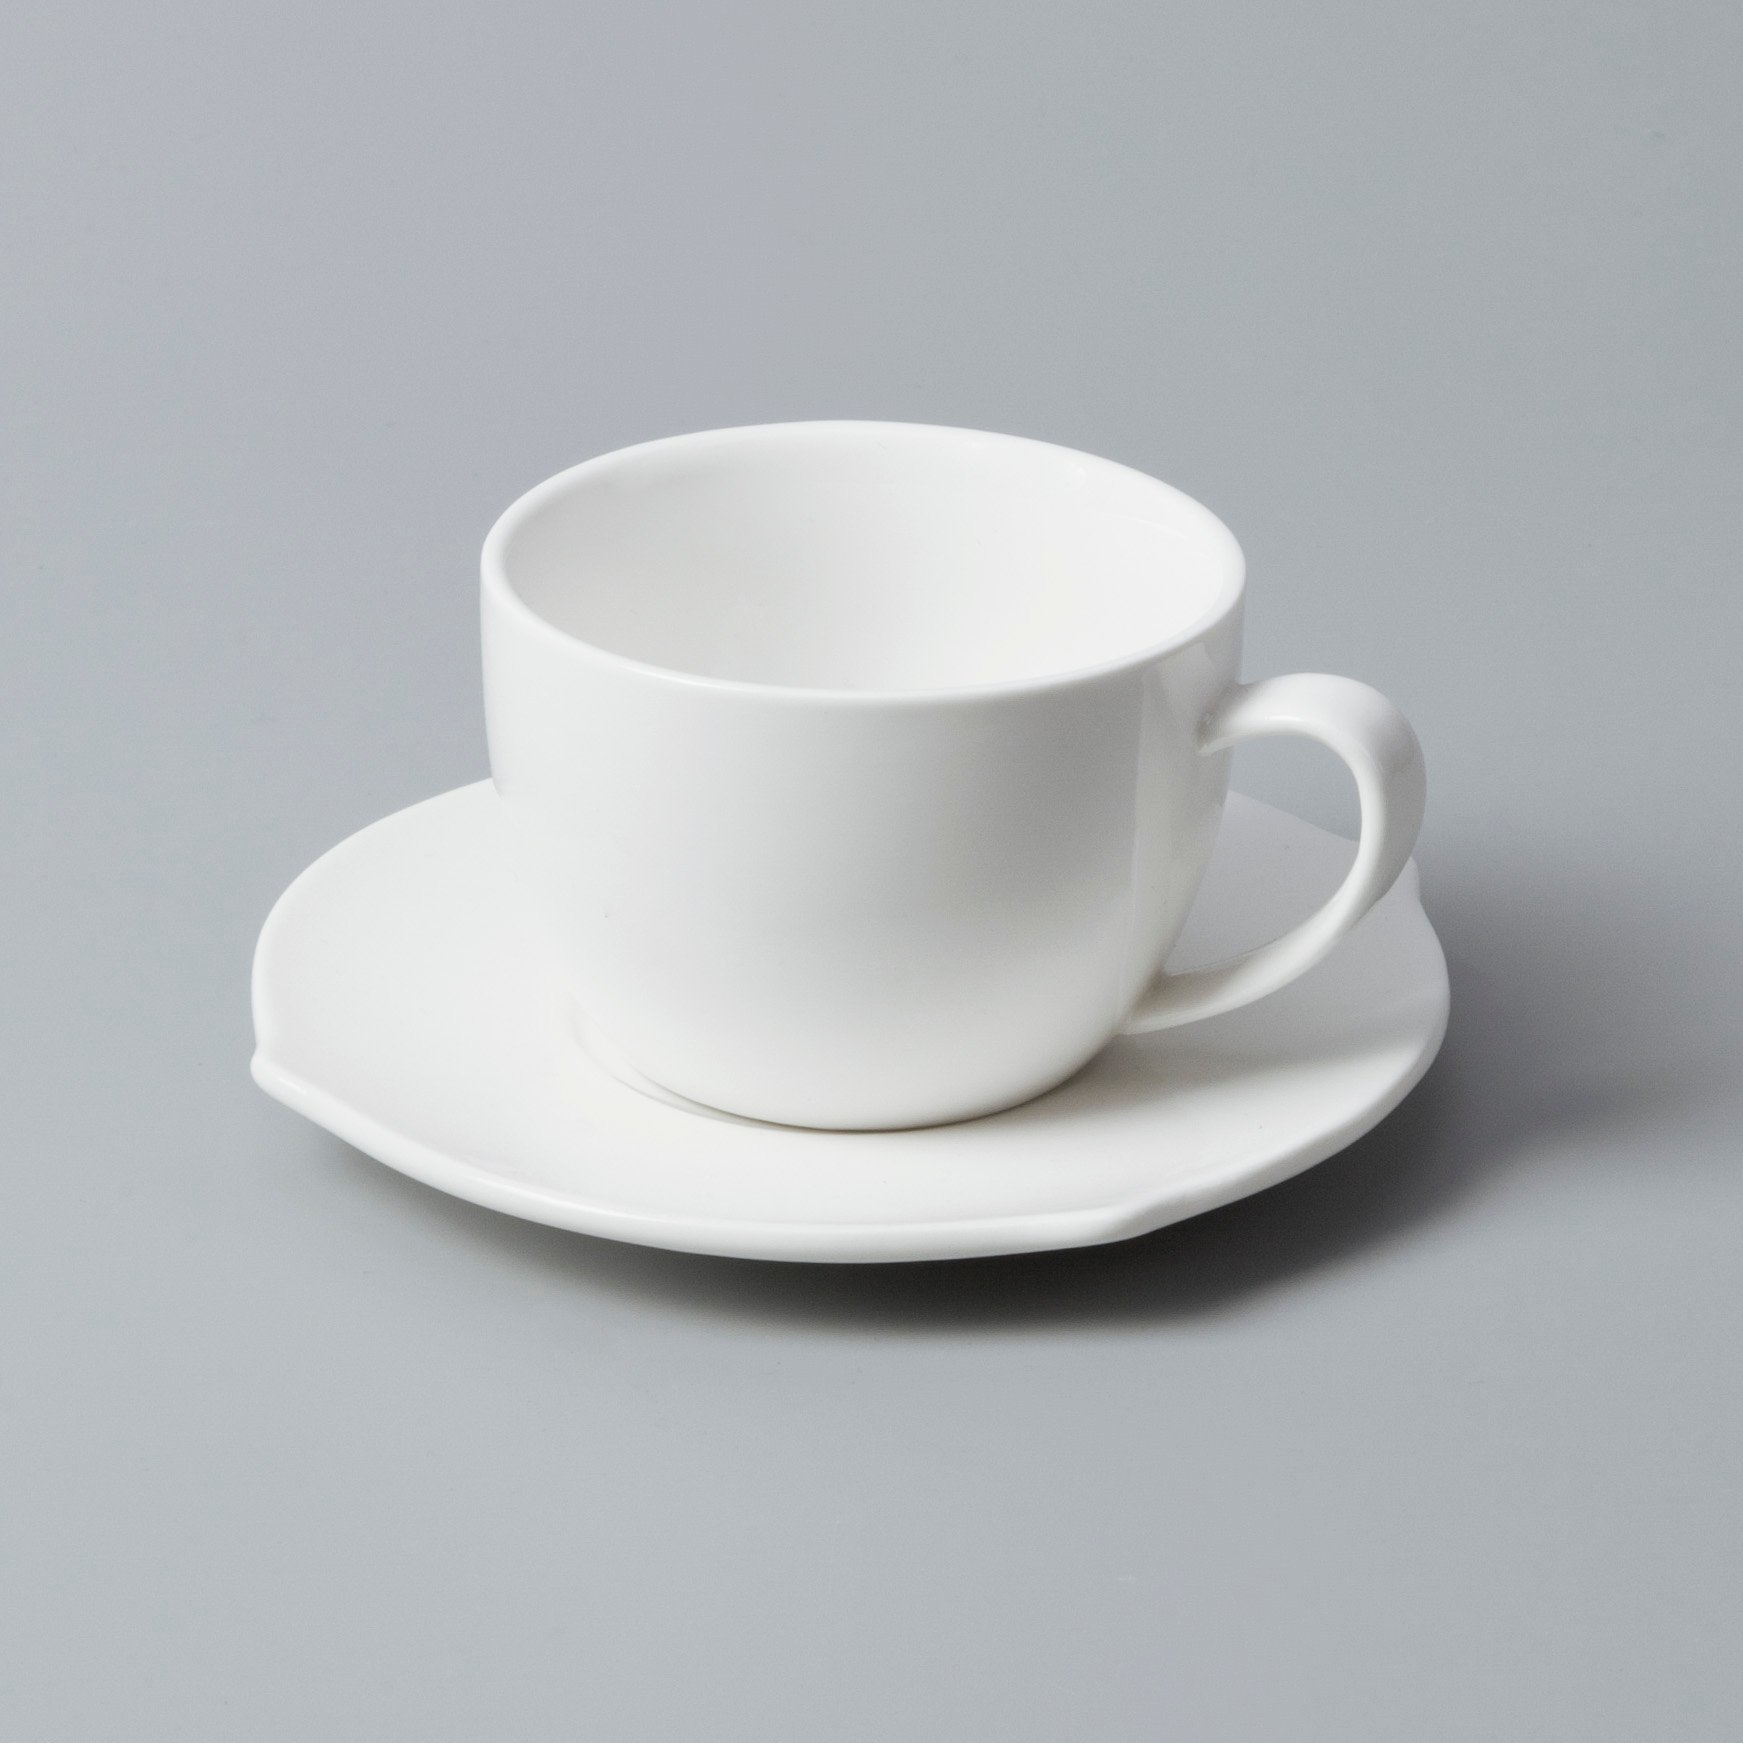 white porcelain tableware dinnerware surface white dinner sets Two Eight Warranty